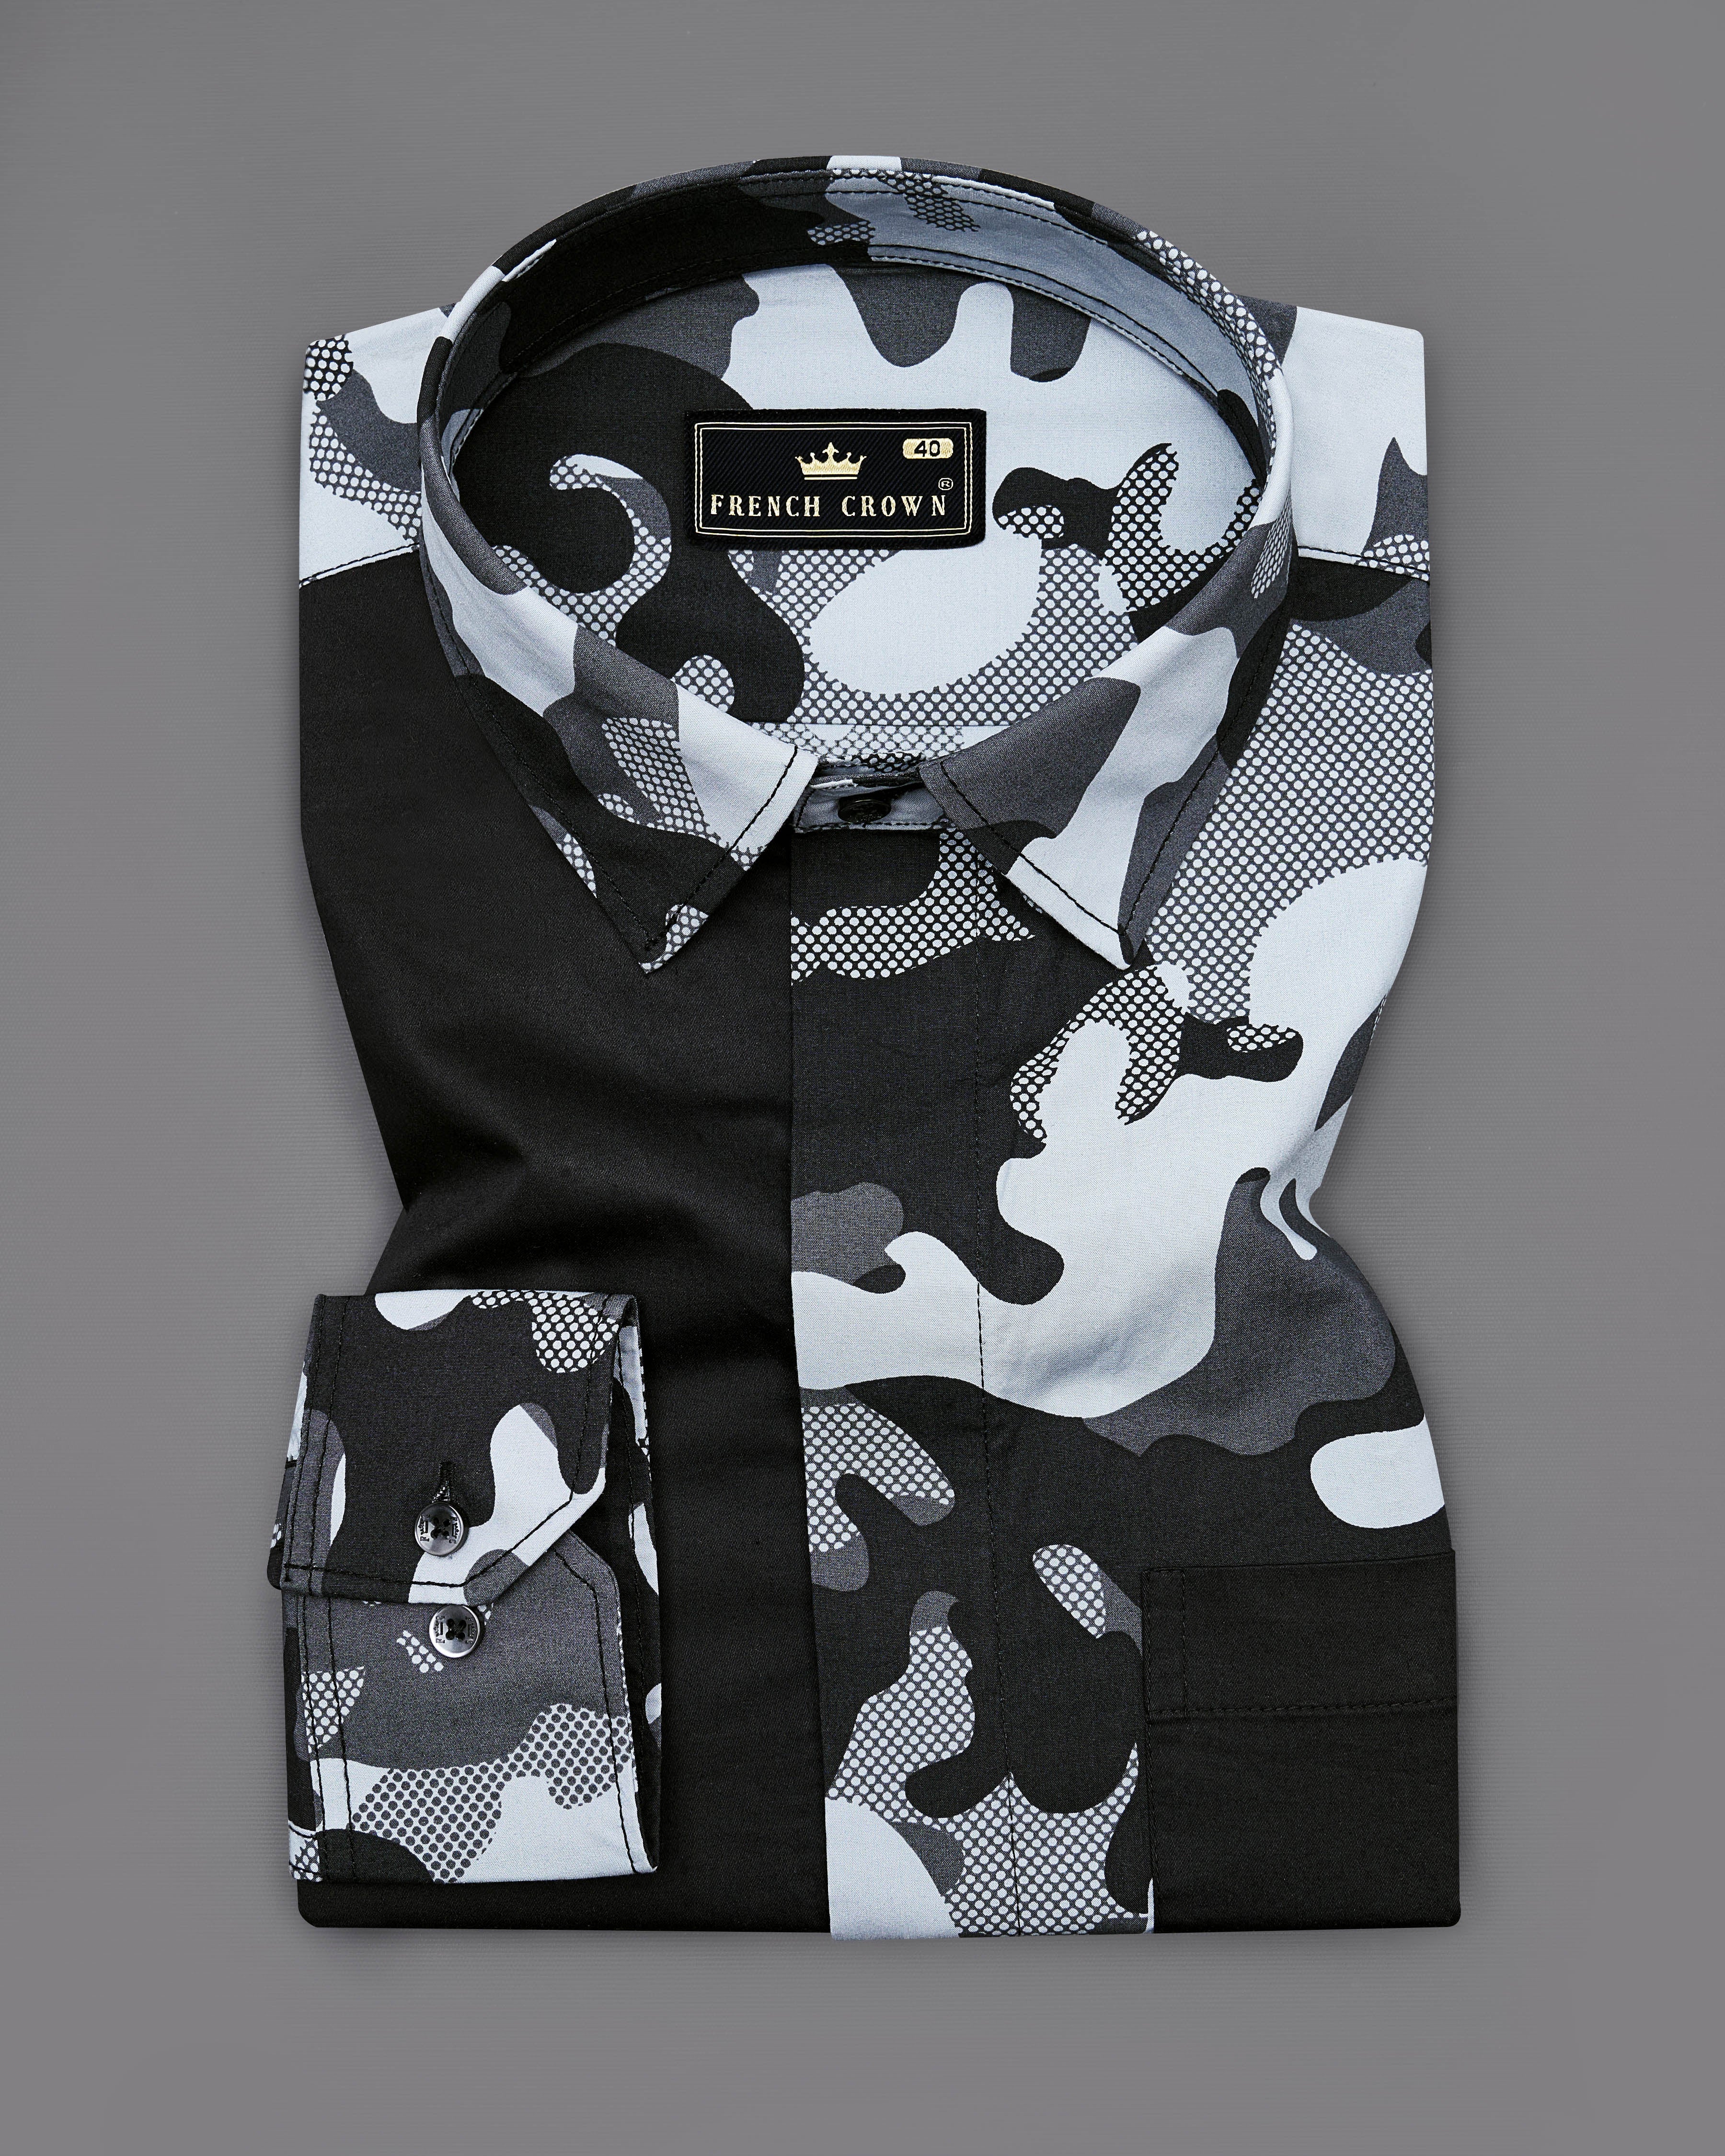 Gunmetal Gray with Black and White Camouflage Printed Premium Tencel Designer Shirt 8909-P311-38, 8909-P311-H-38,  8909-P311-39,  8909-P311-H-39,  8909-P311-40,  8909-P311-H-40,  8909-P311-42,  8909-P311-H-42,  8909-P311-44,  8909-P311-H-44,  8909-P311-46,  8909-P311-H-46,  8909-P311-48,  8909-P311-H-48,  8909-P311-50,  8909-P311-H-50,  8909-P311-52,  8909-P311-H-52